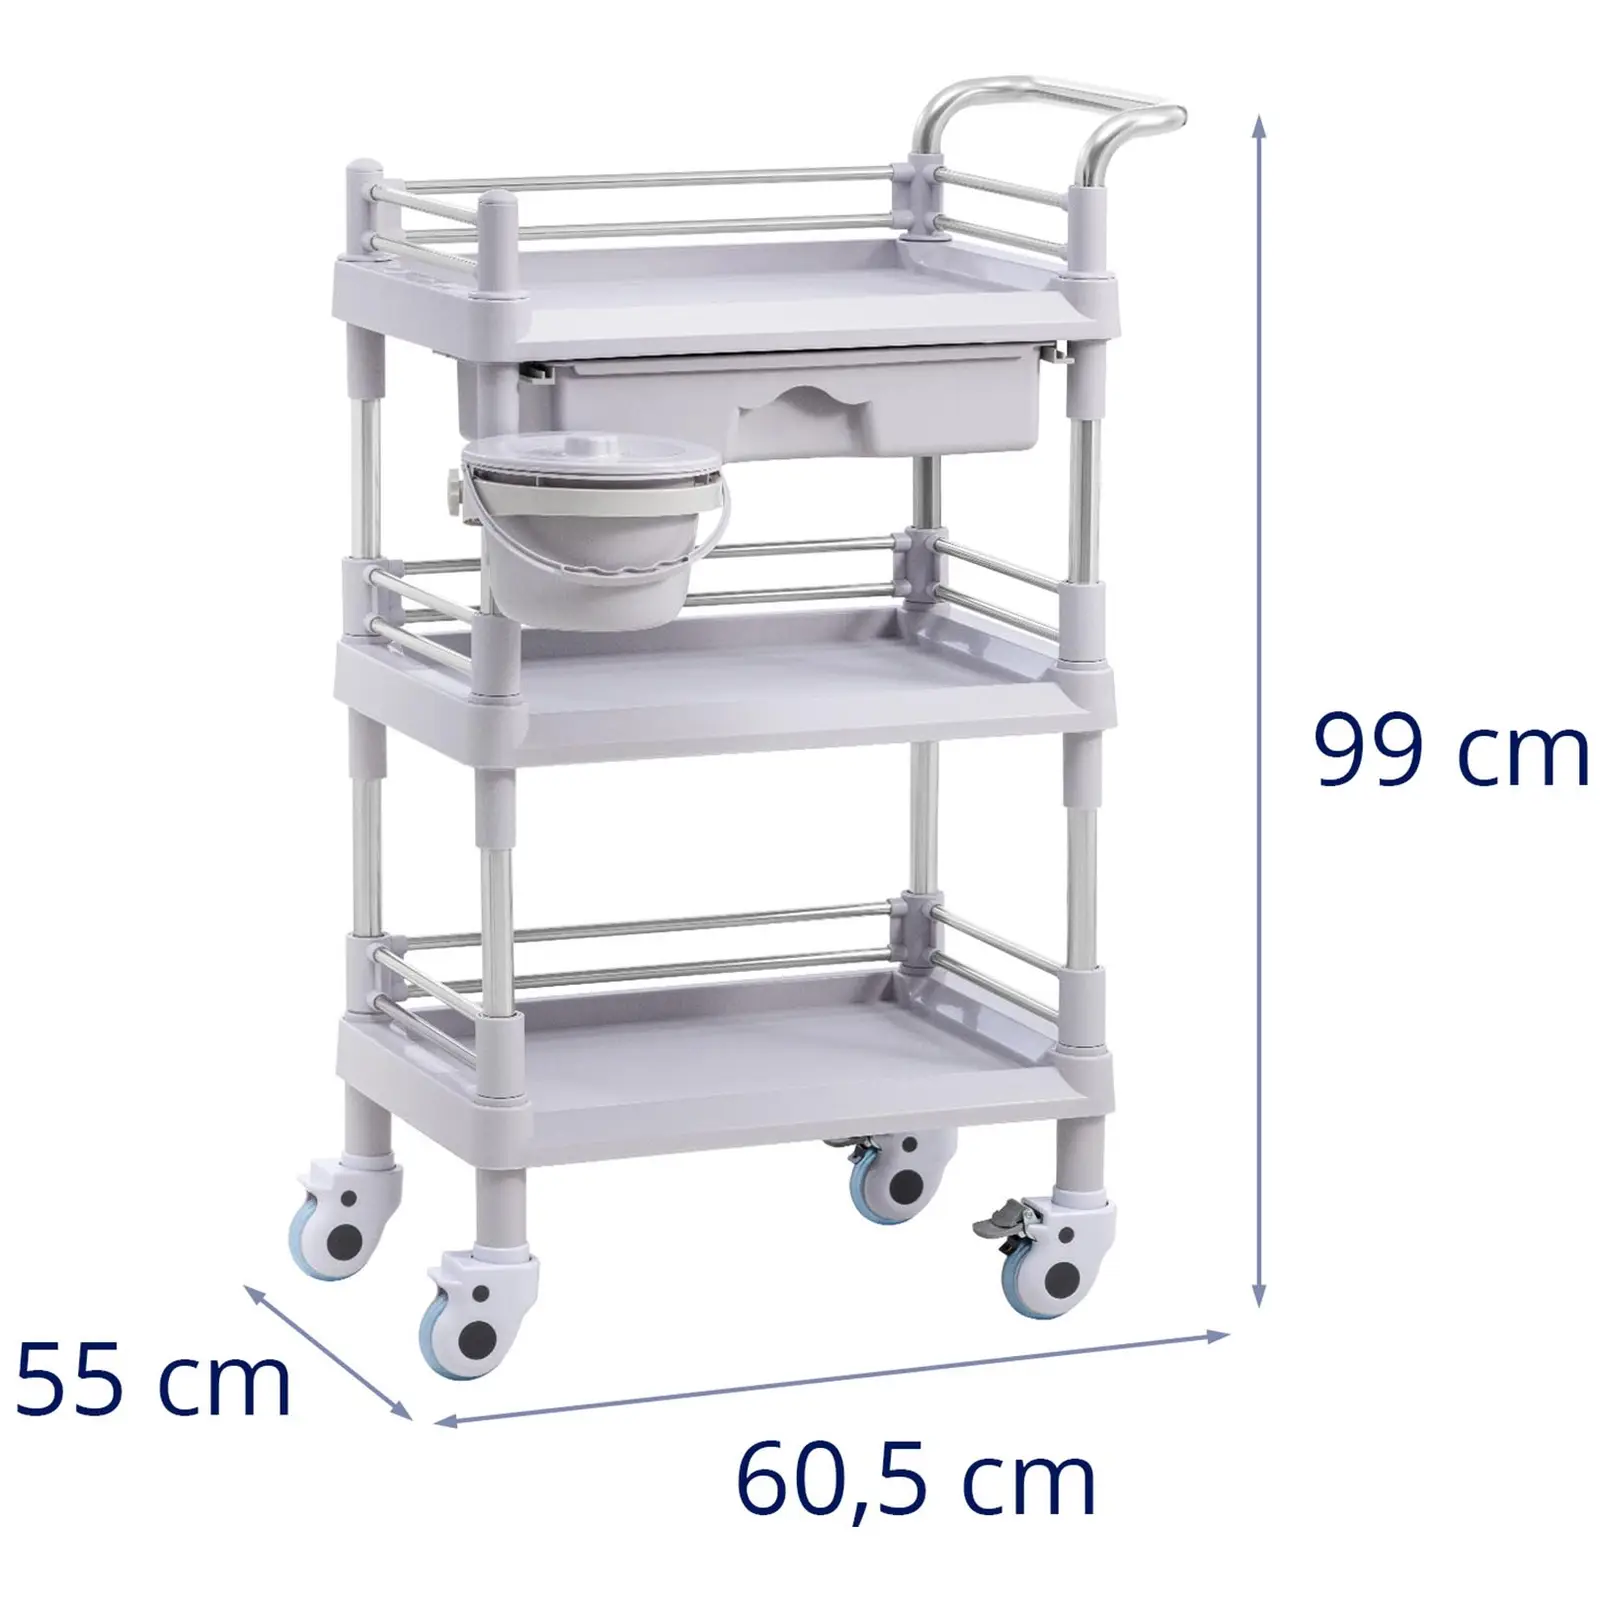 Laboratory Trolley - 3 shelves each 44 x 30 x 14 cm - 1 drawer - 30 kg